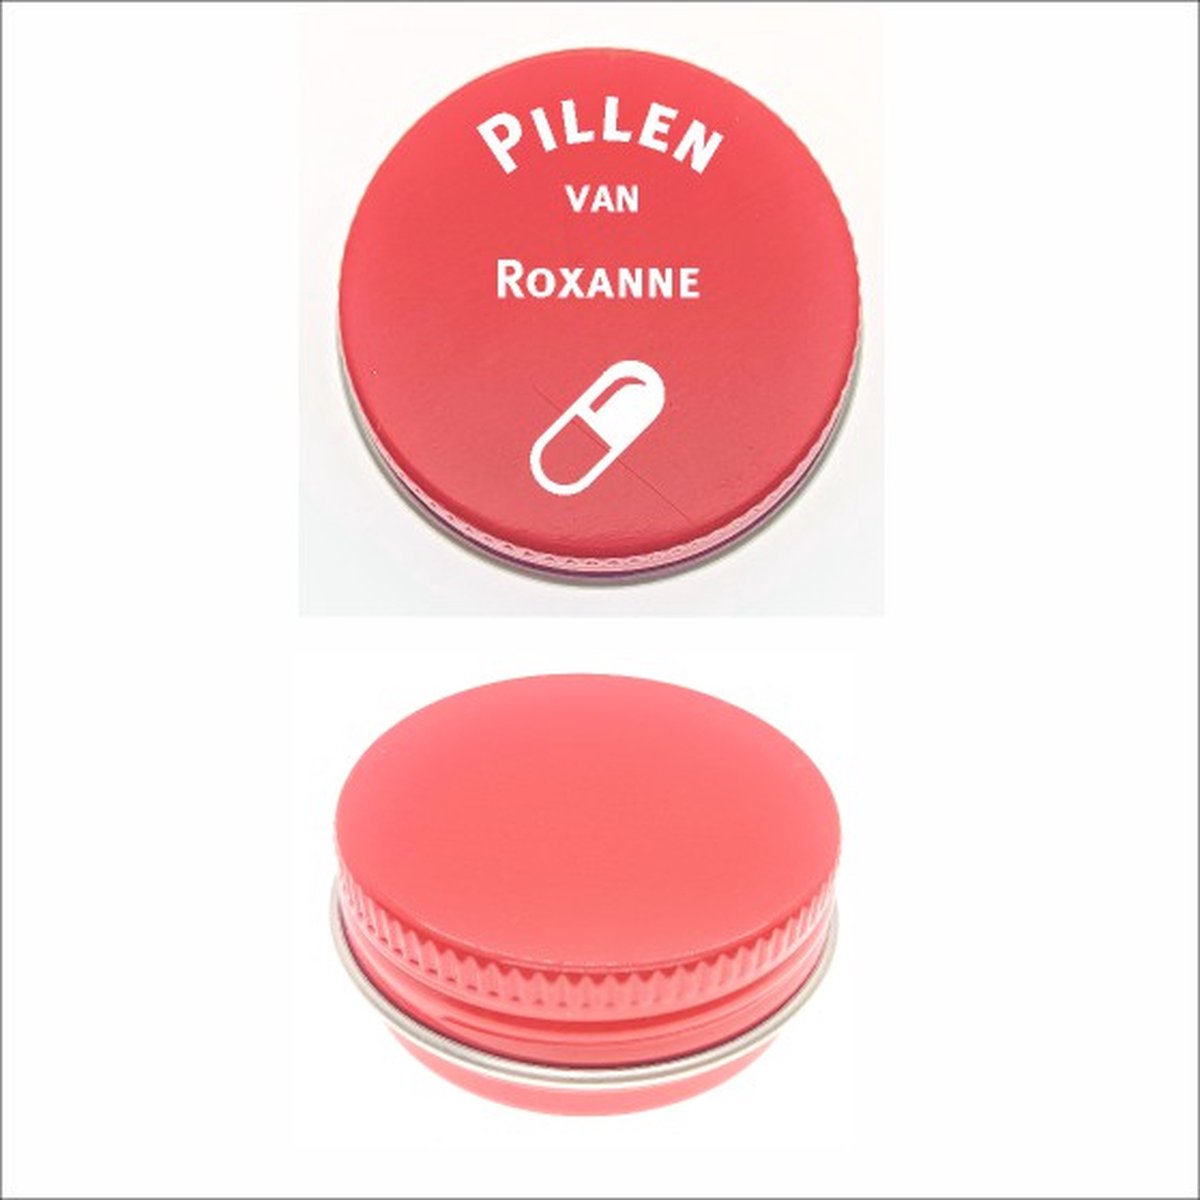 Pillen Blikje Met Naam Gravering - Roxanne